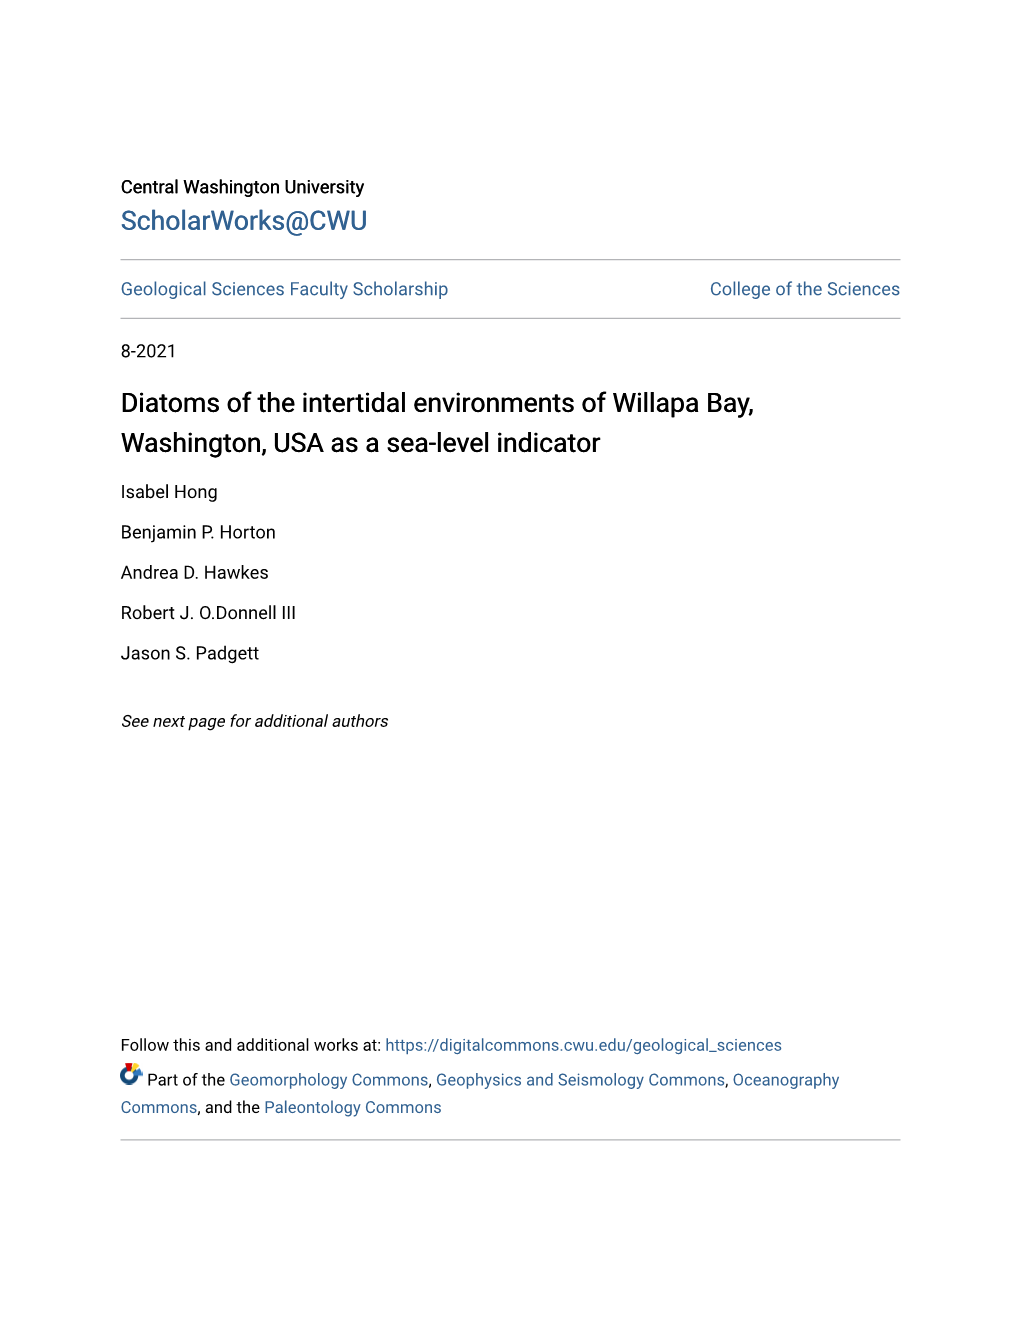 Diatoms of the Intertidal Environments of Willapa Bay, Washington, USA As a Sea-Level Indicator